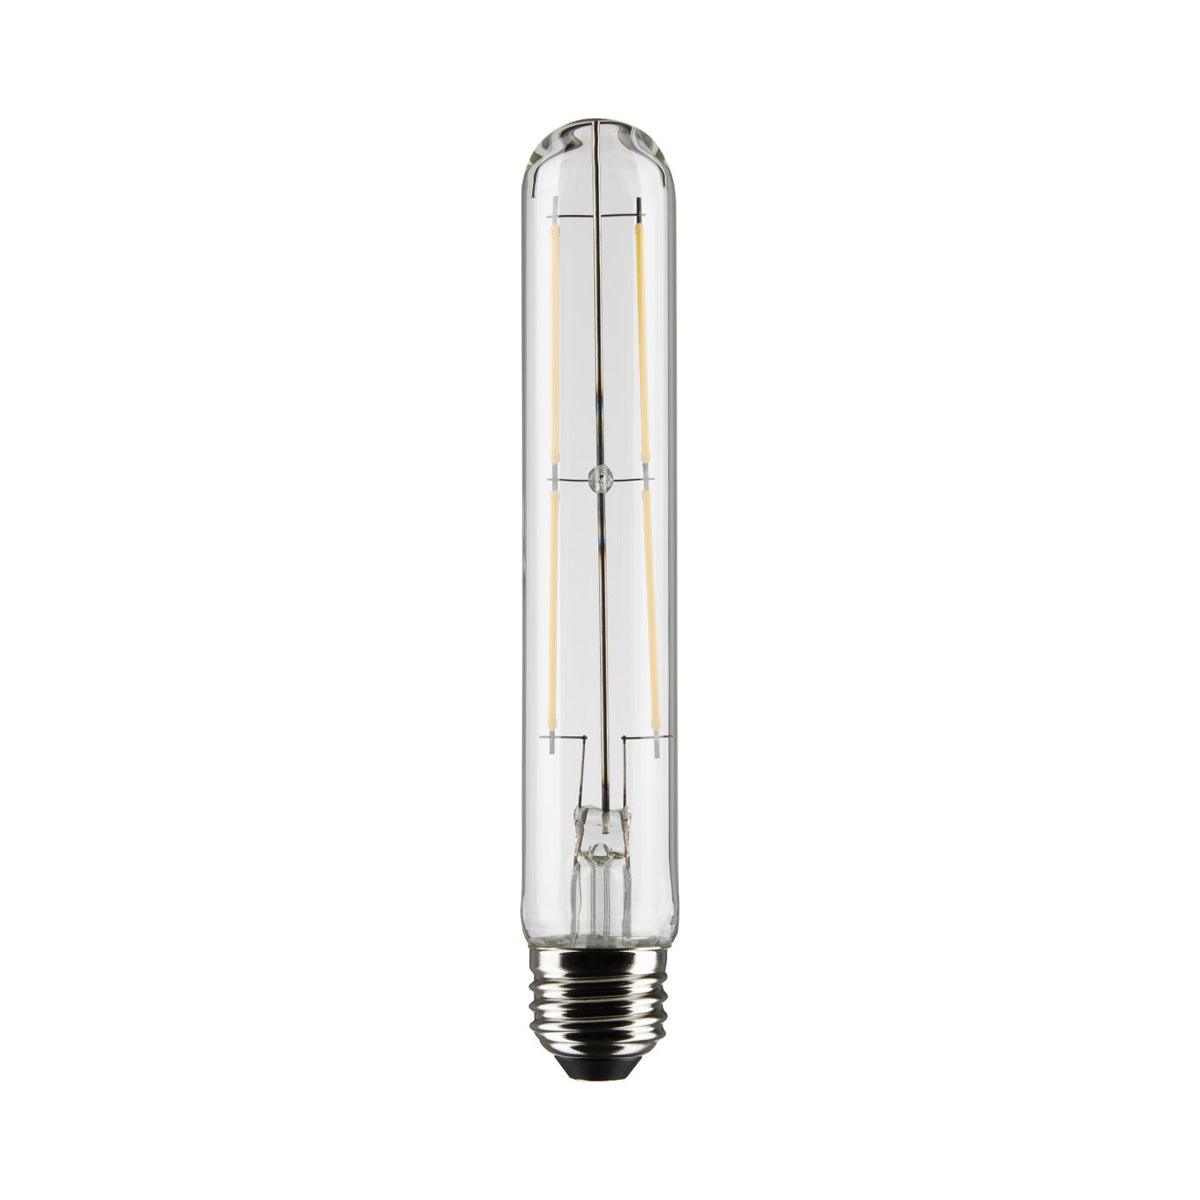 LED T9 Single Tube Bulb, 8 Watt, 800 Lumens, 2700K, E26 Medium Base, Clear Finish, Pack Of 2